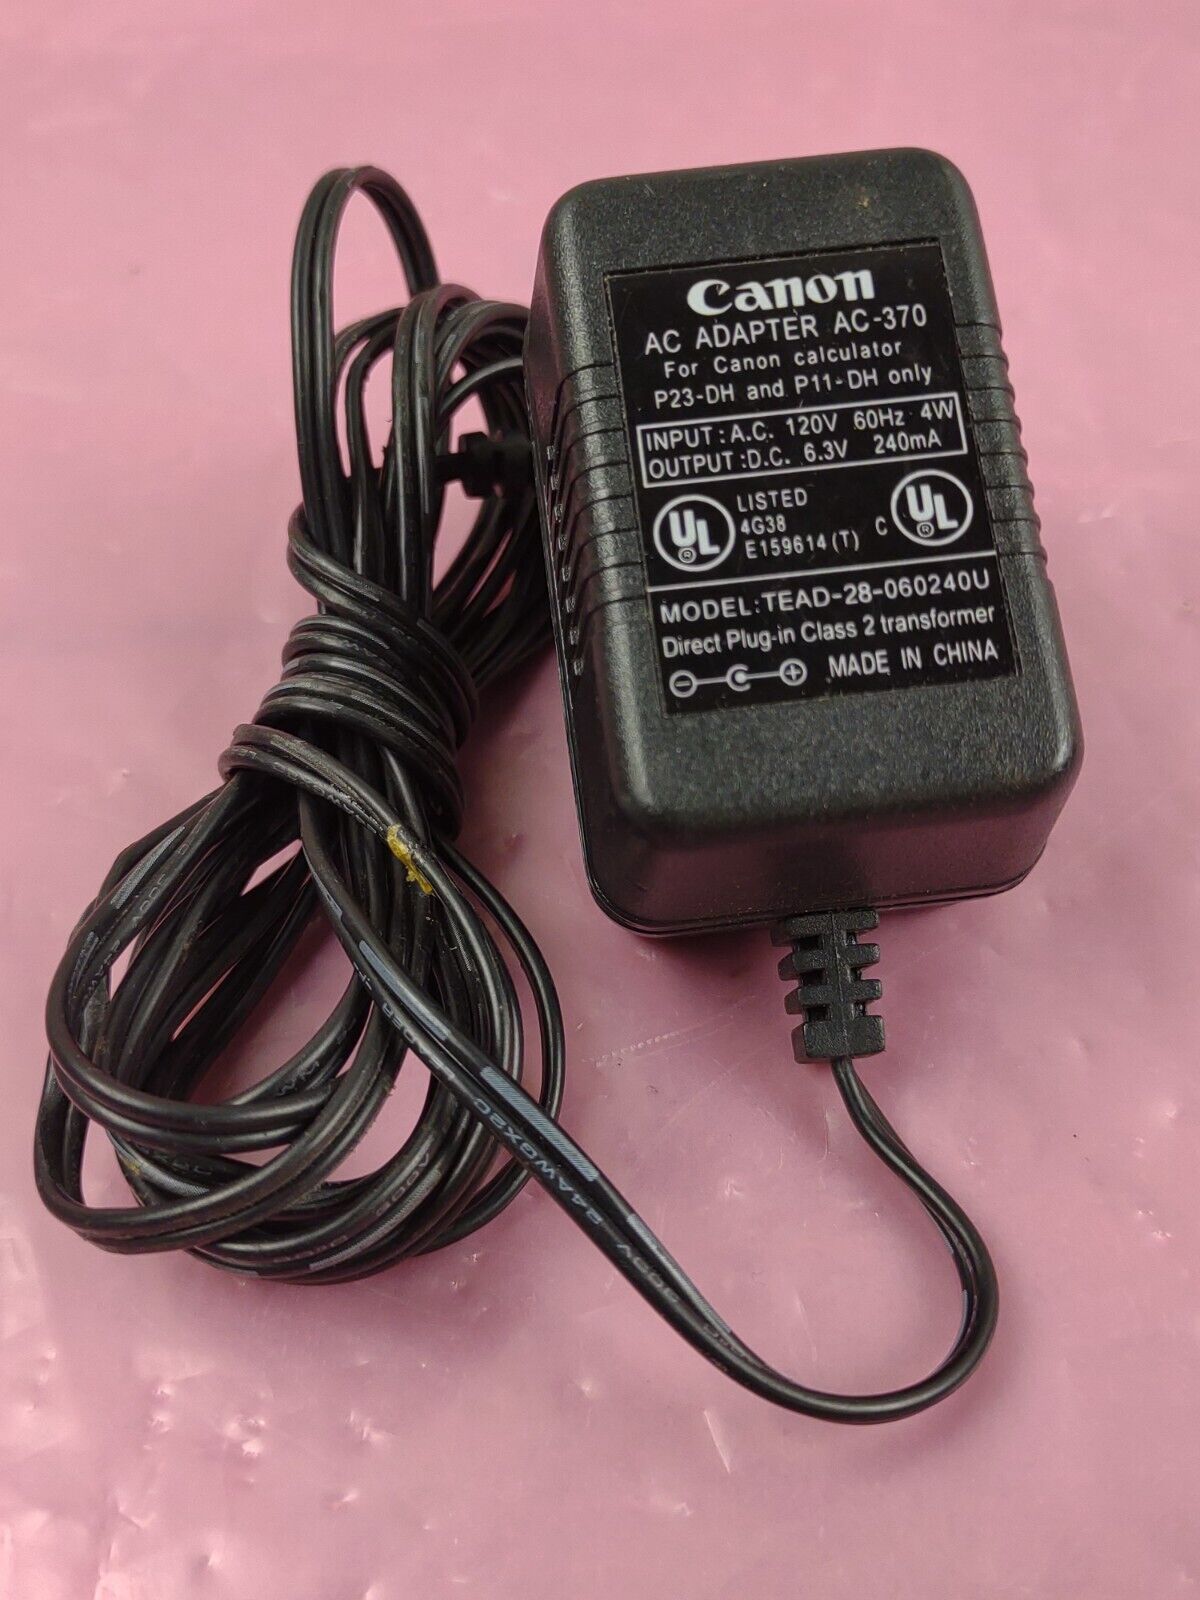 Canon AC Power Adapter AC-370 Model TEAD-28-060240U Input 120v Output 6.3v 240ma Type: AC/AC Adapter Features: Powe